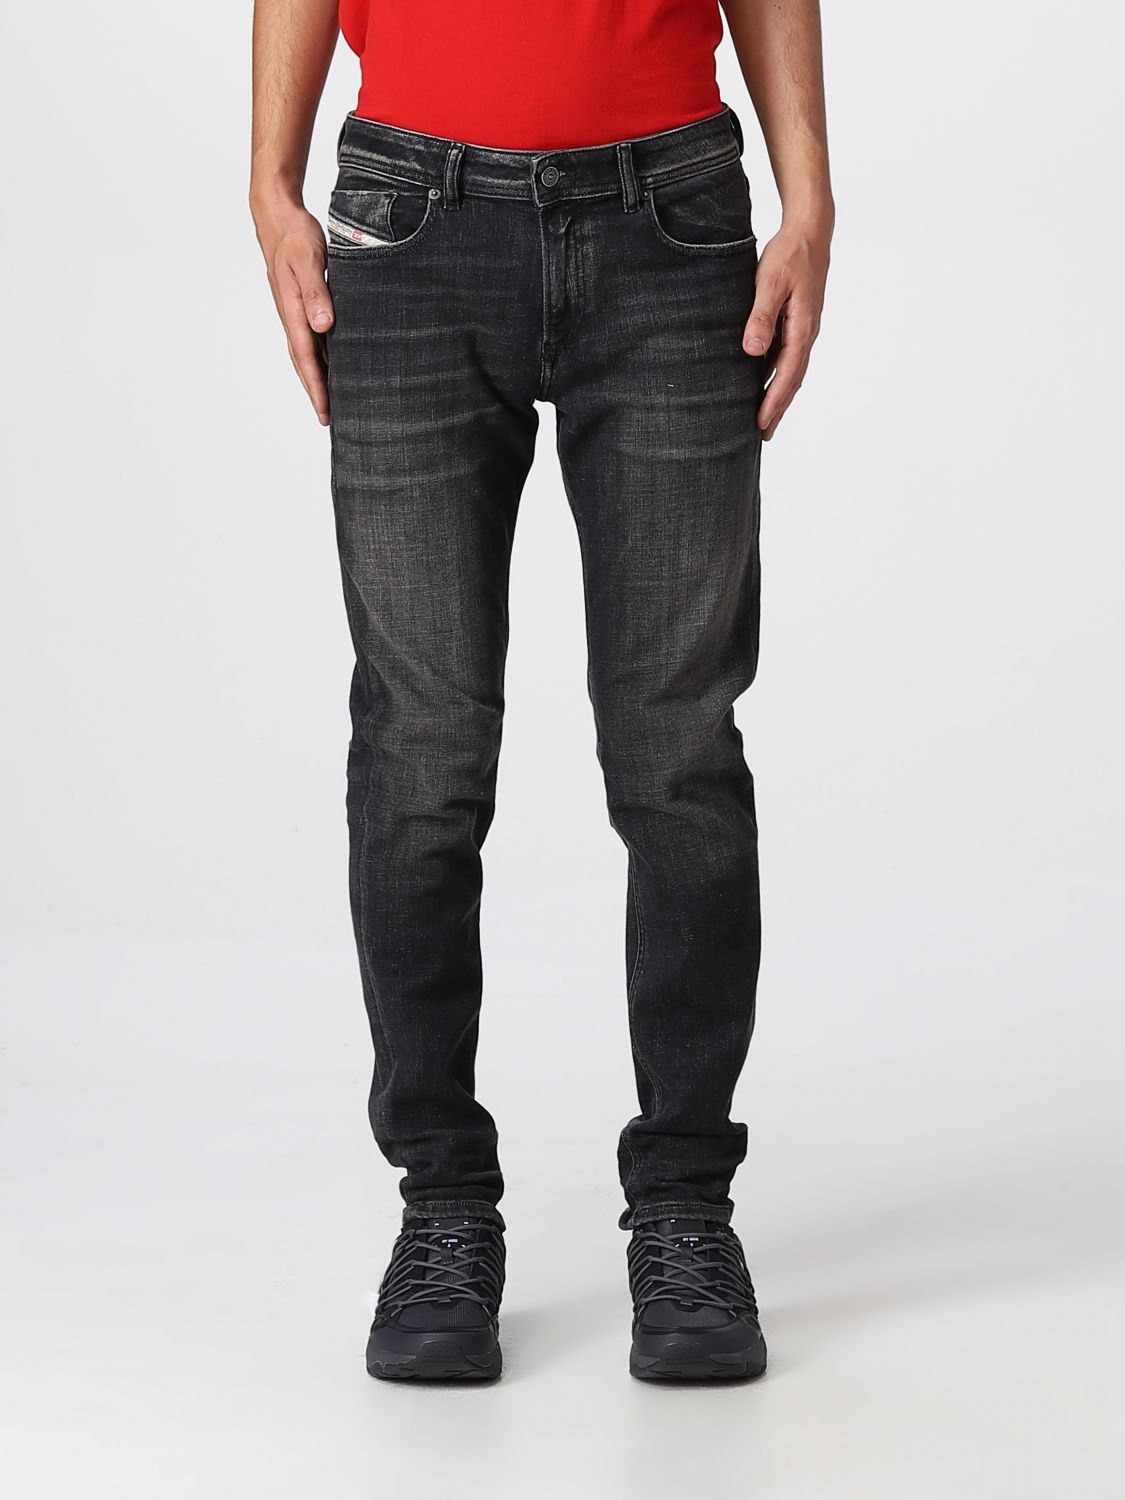 Hoorzitting Reusachtig kloof DIESEL: jeans for man - Black | Diesel jeans A0359509D88 online on  GIGLIO.COM